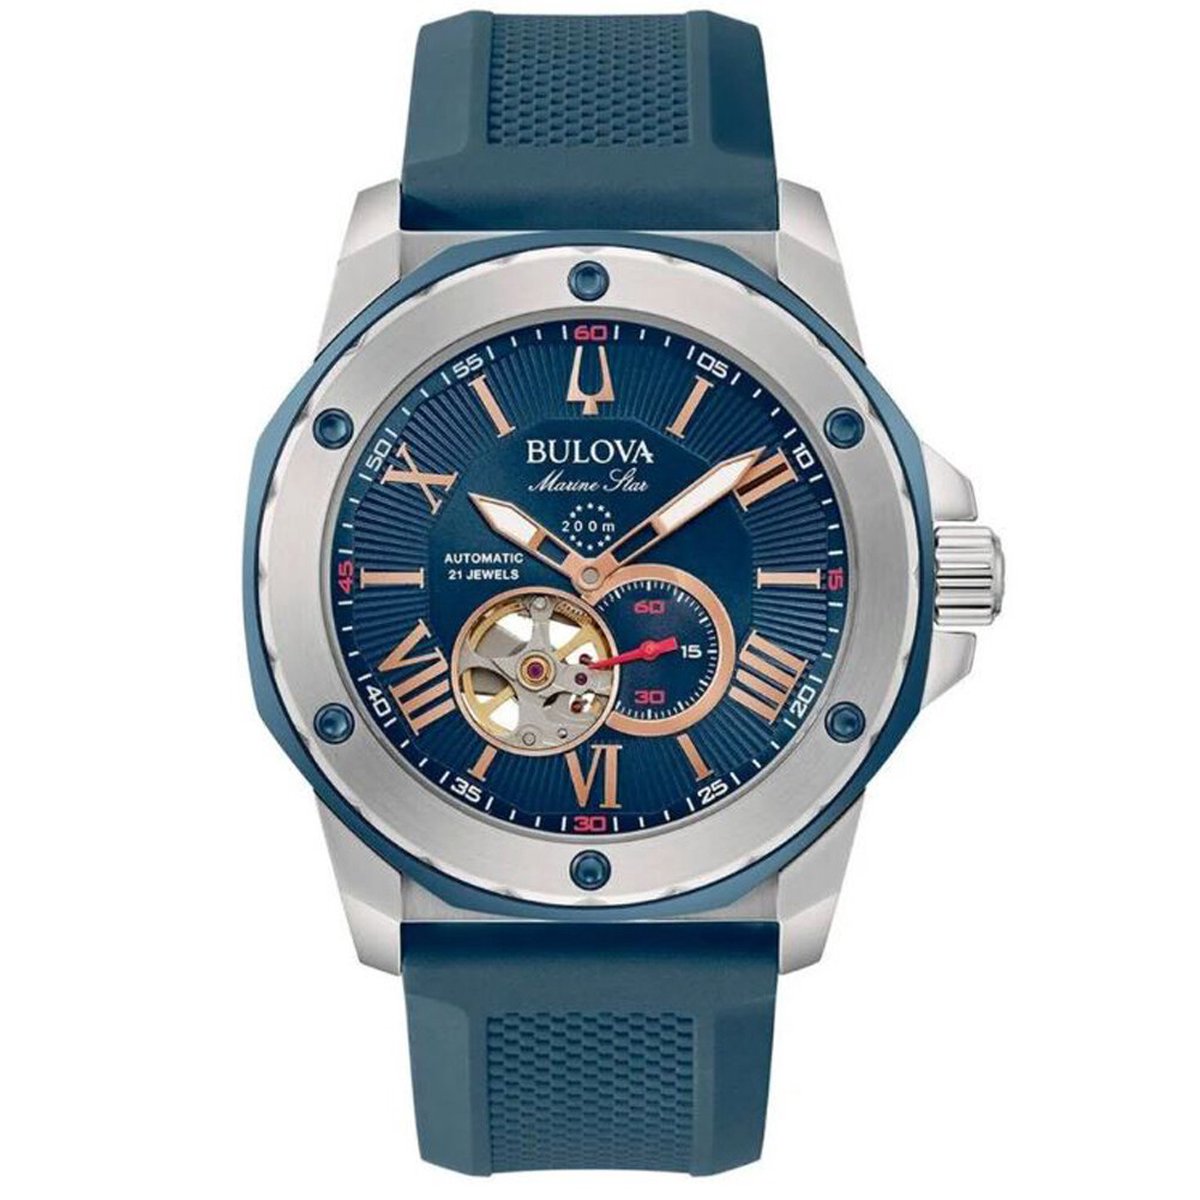 Bulova Marine Star Horloge - Bulova heren horloge - Blauw - diameter 45 mm - roestvrij staal